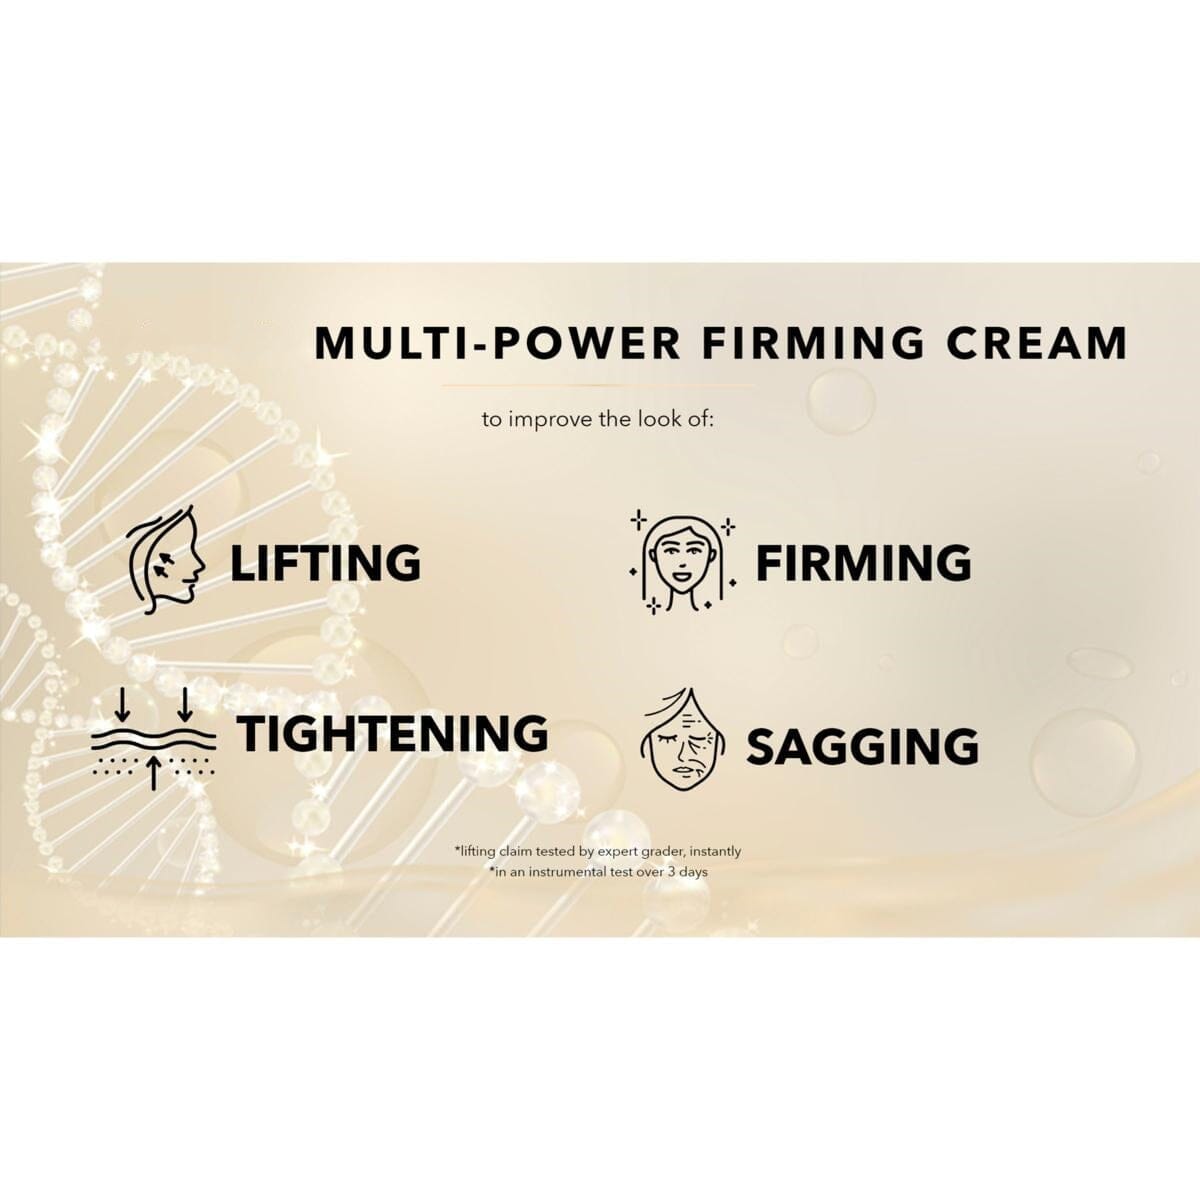 Multi-Power Firming Magic Cream